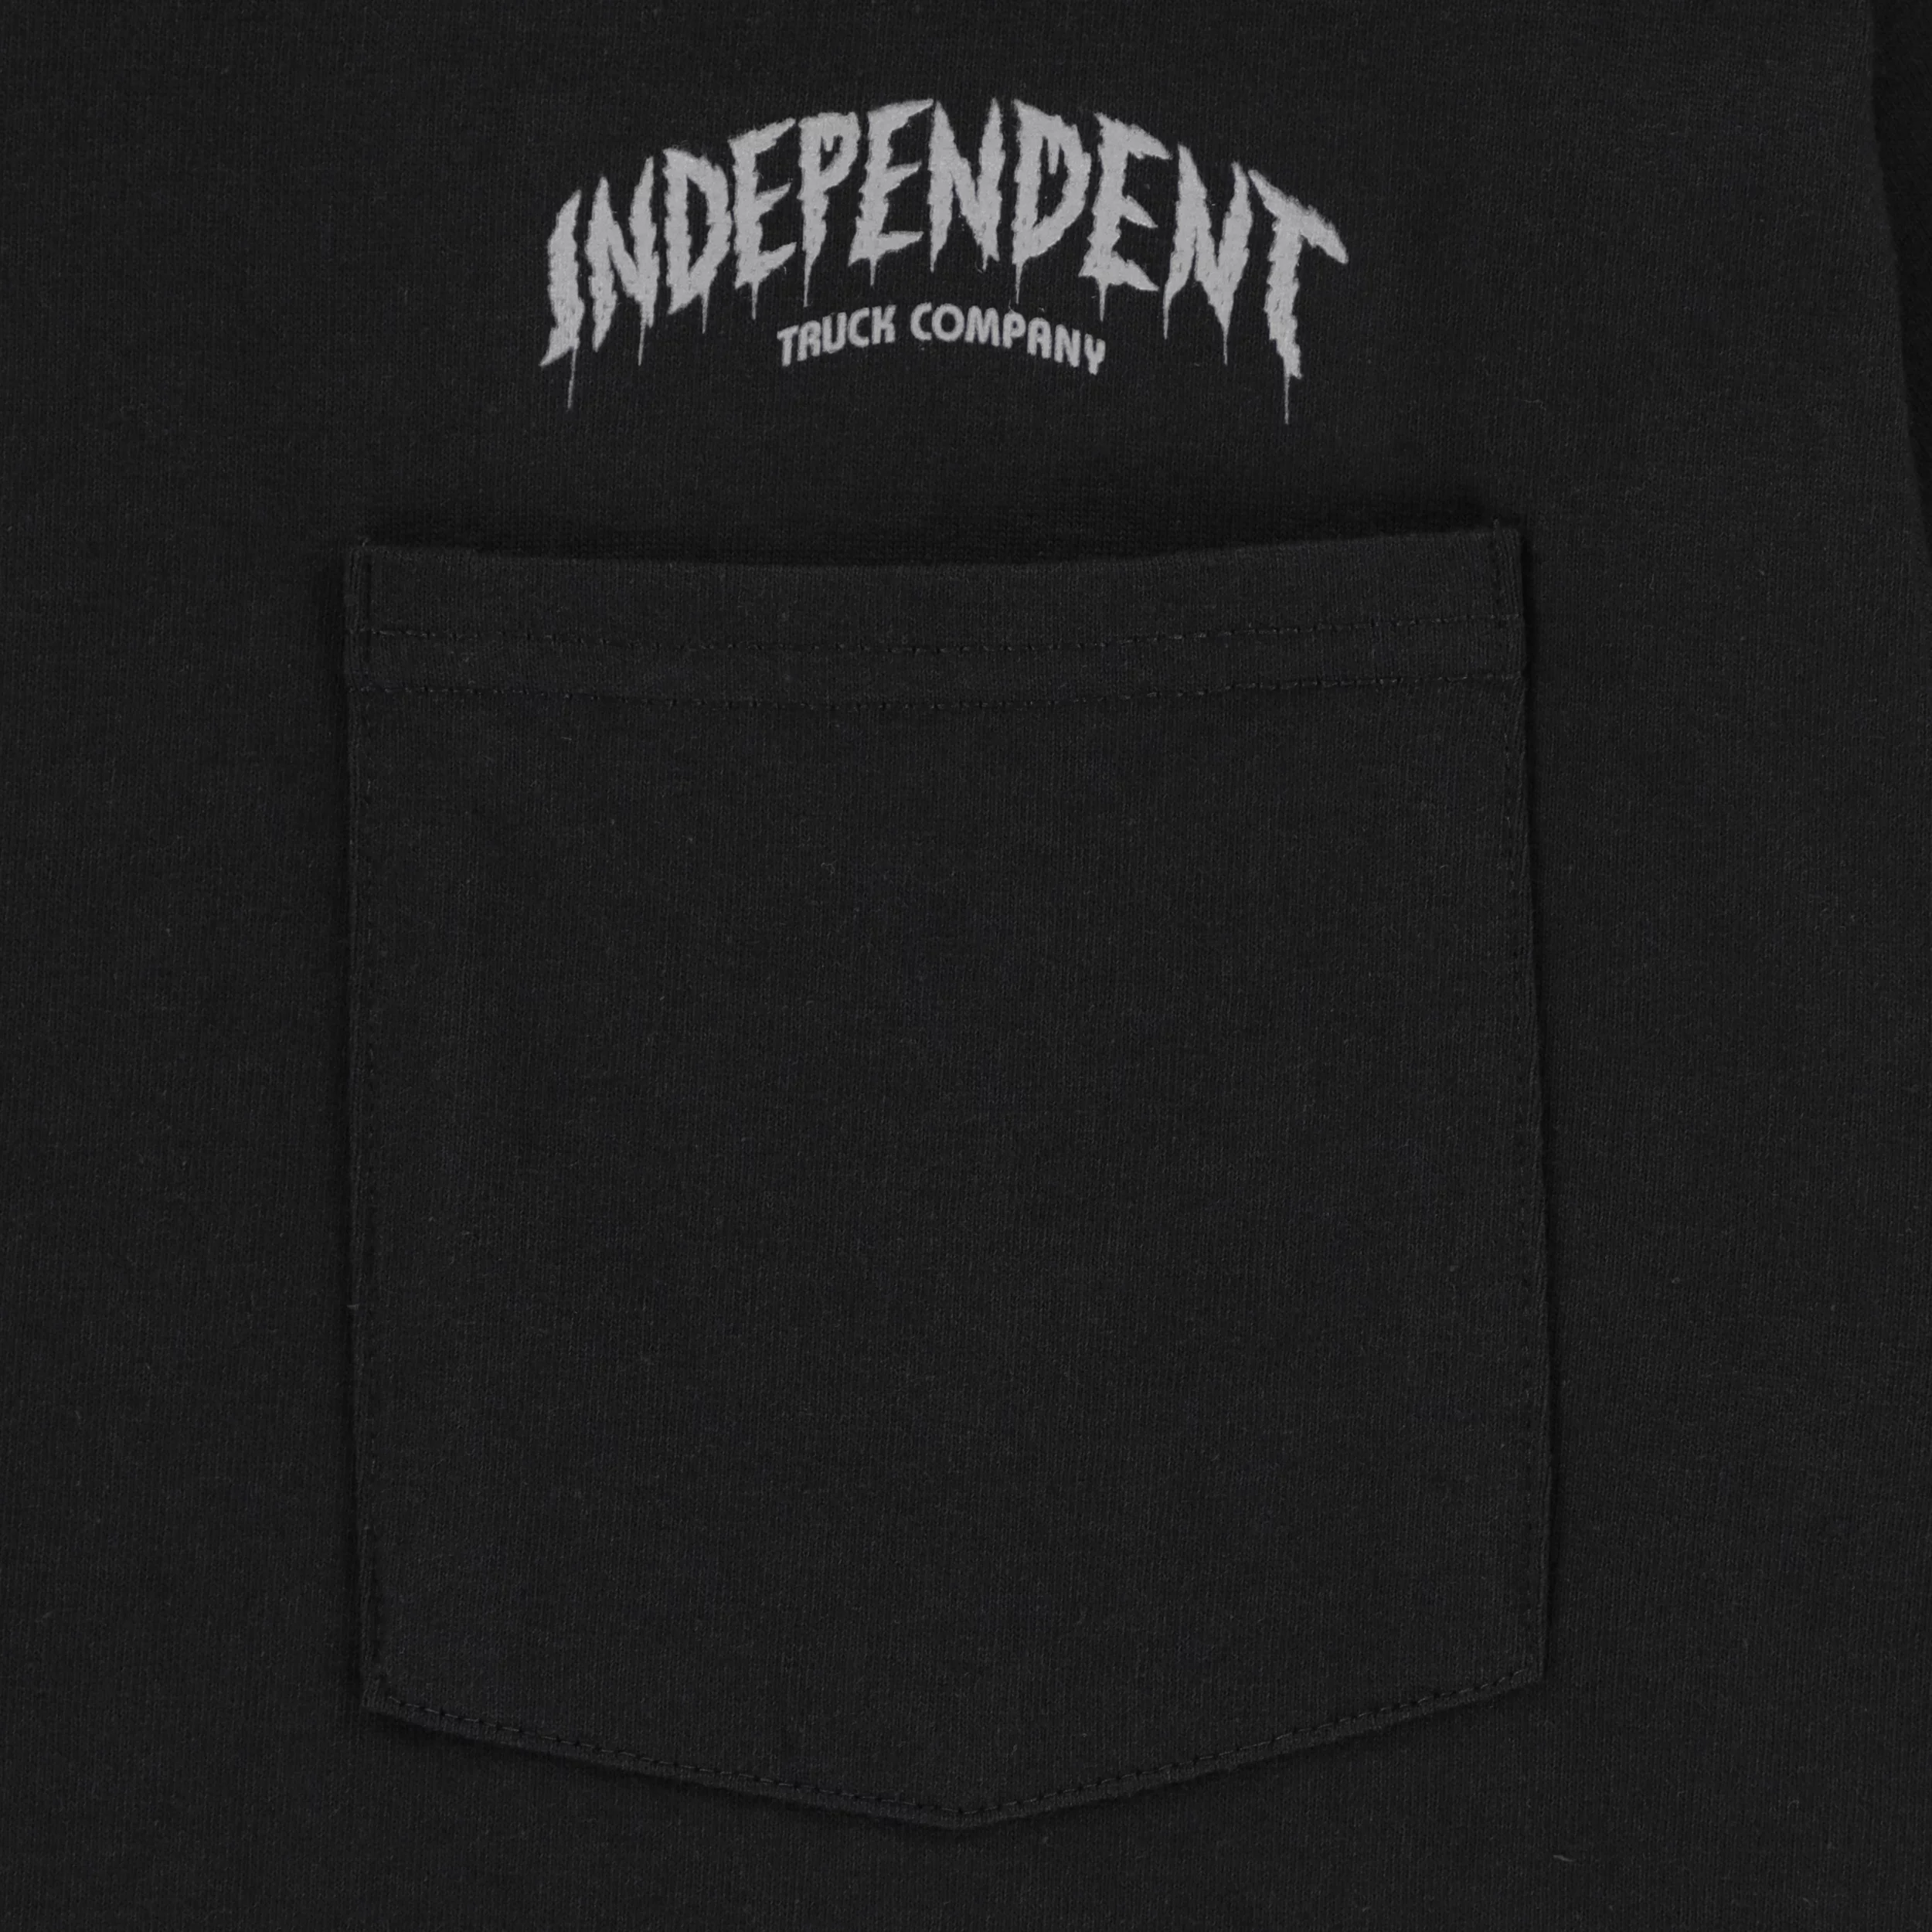 Independent Por Vida T-Shirt - black